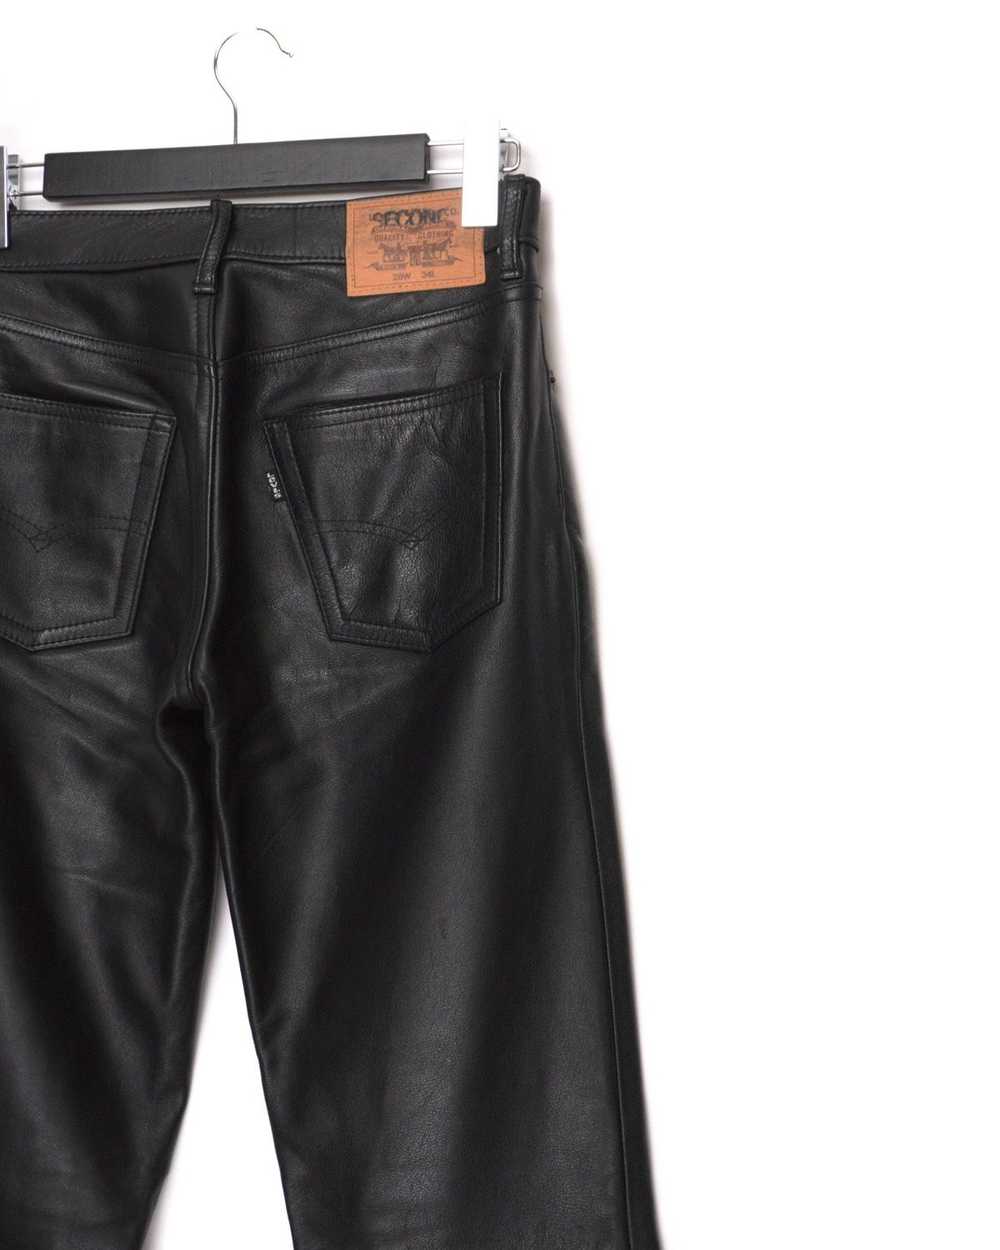 Levi's Vintage Levi’s Genuine Leather Black Pants - image 8